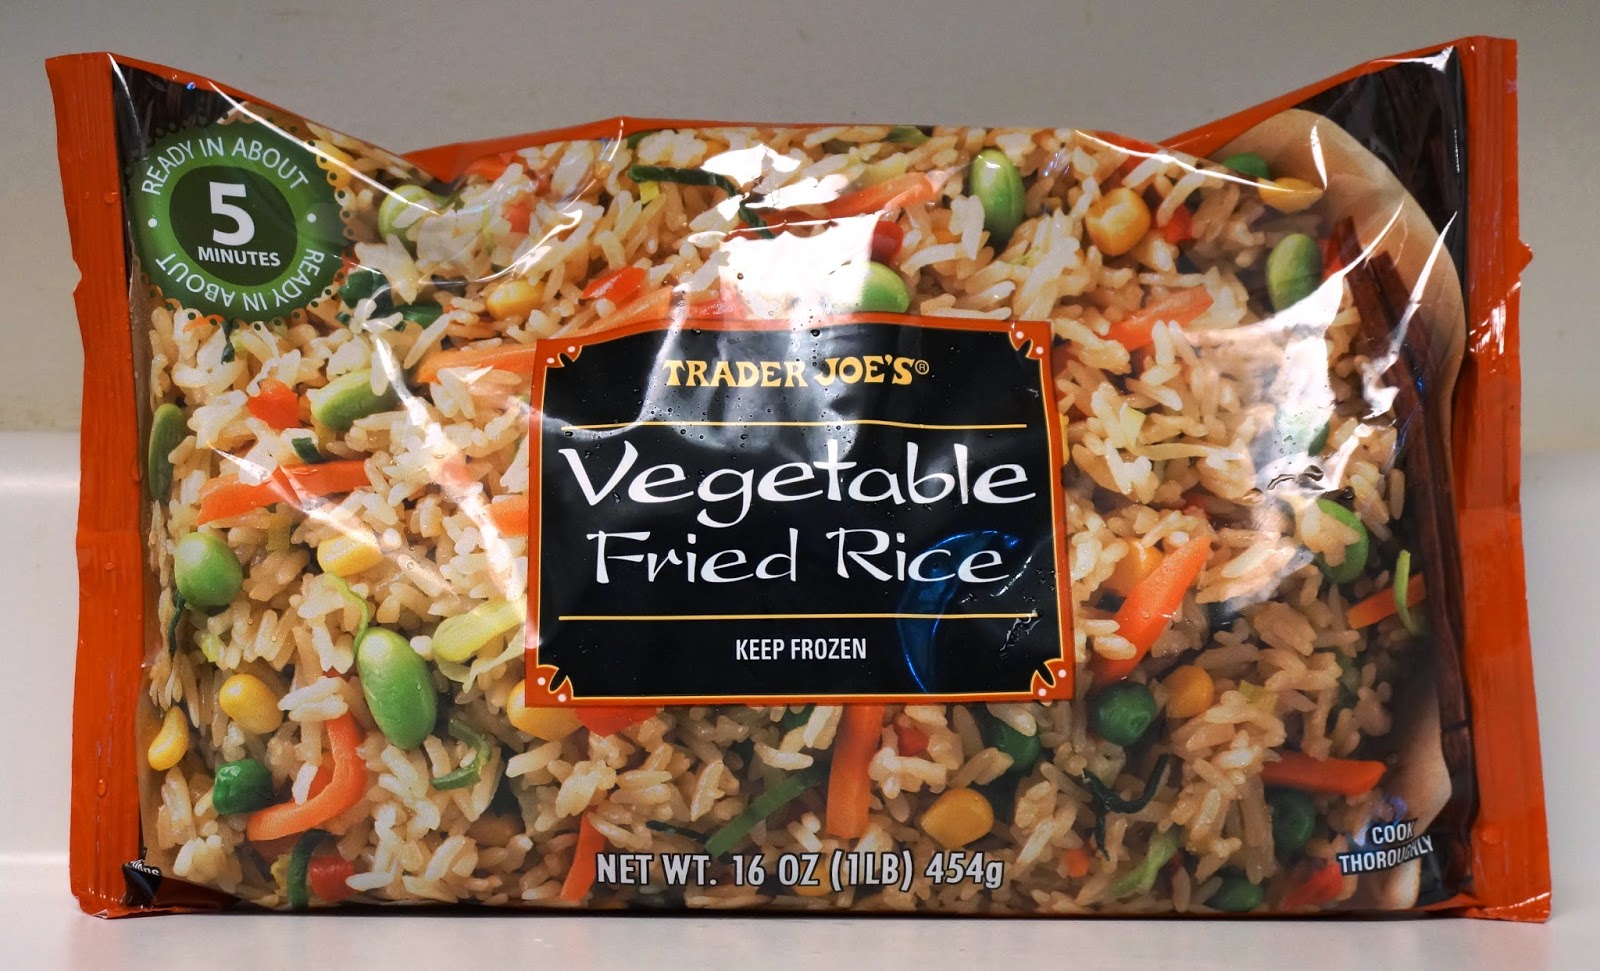 Exploring Trader Joe's: Trader Joe's Vegetable Fried Rice